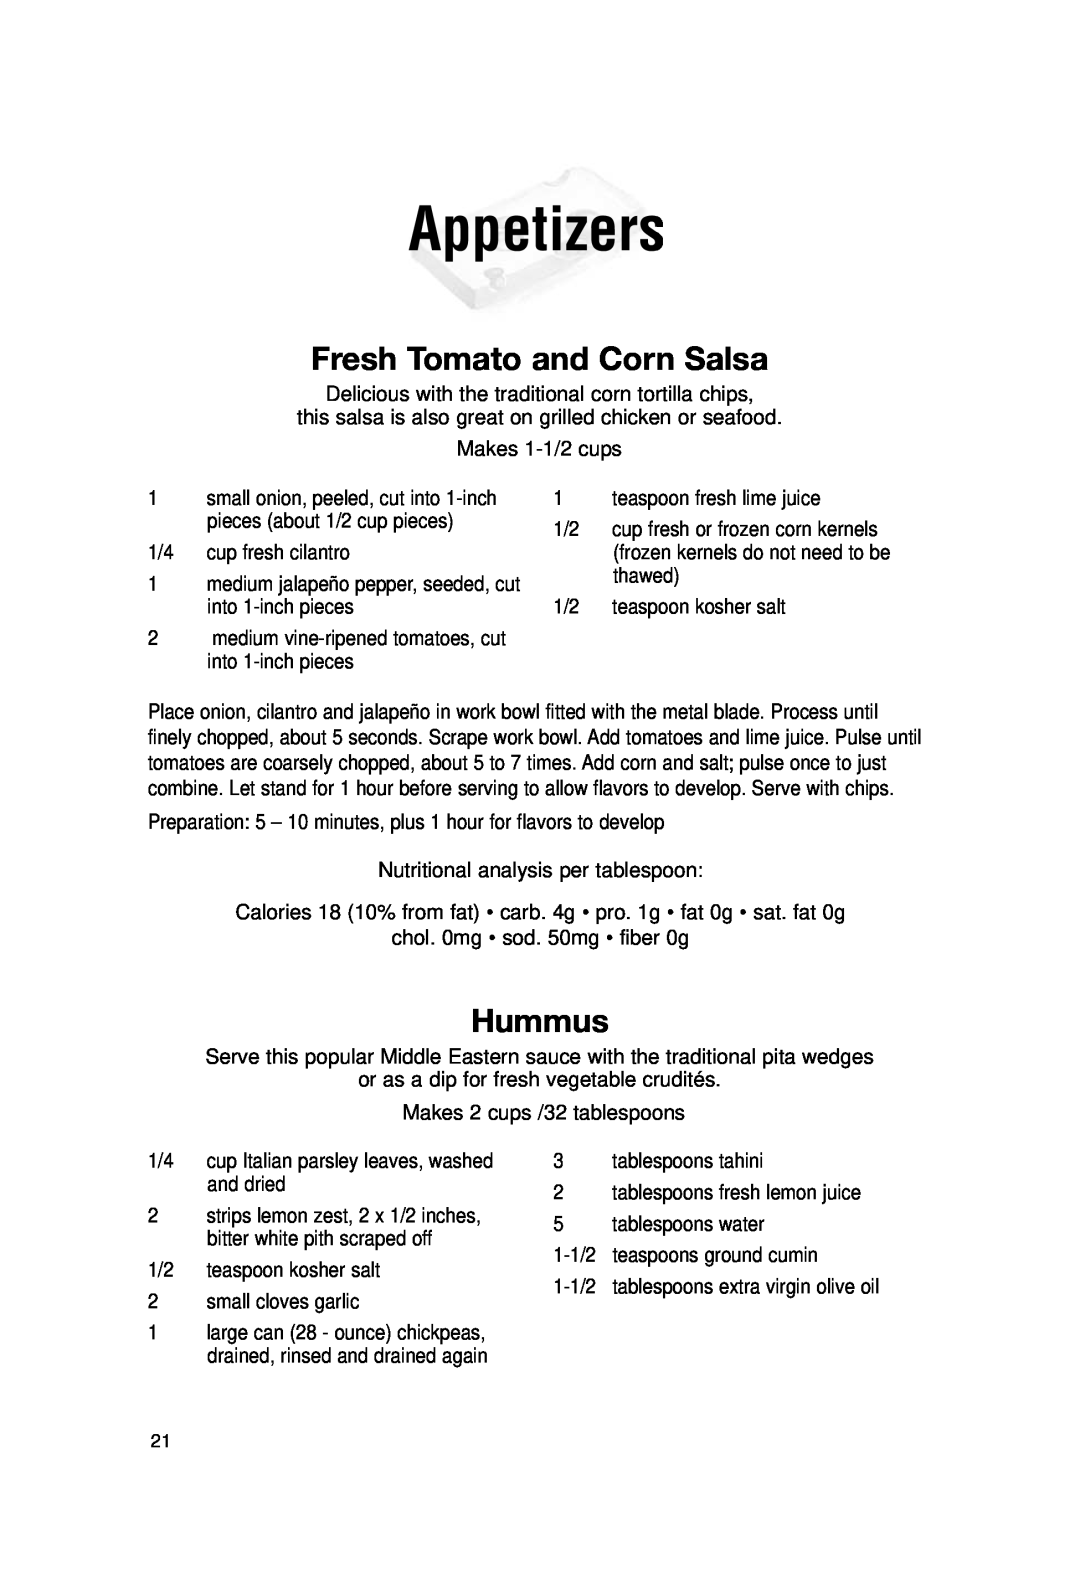 Cuisinart DLC-2007N manual Appetizers, Fresh Tomato and Corn Salsa, Hummus 